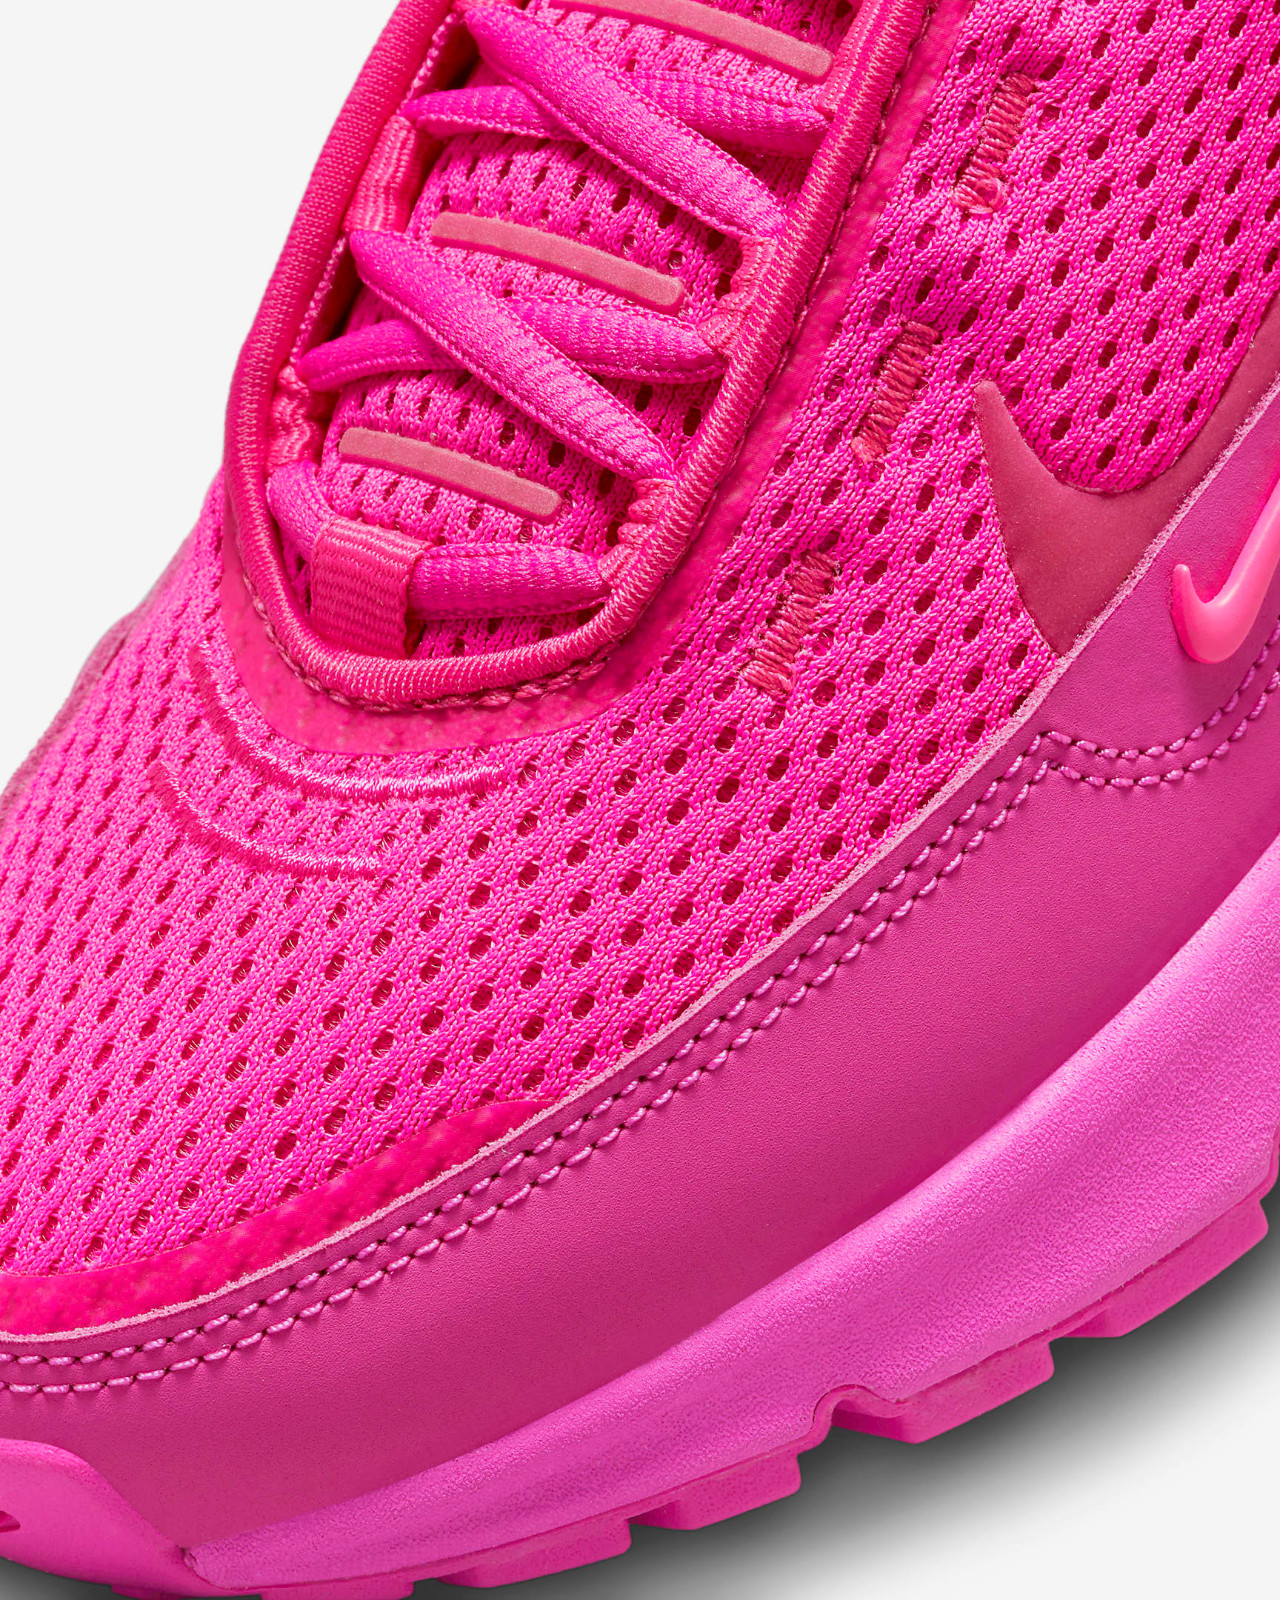 Nike Air Max Pulse Fierce Pink FD6409-600 - Air Max Plus TN - Sepcleat